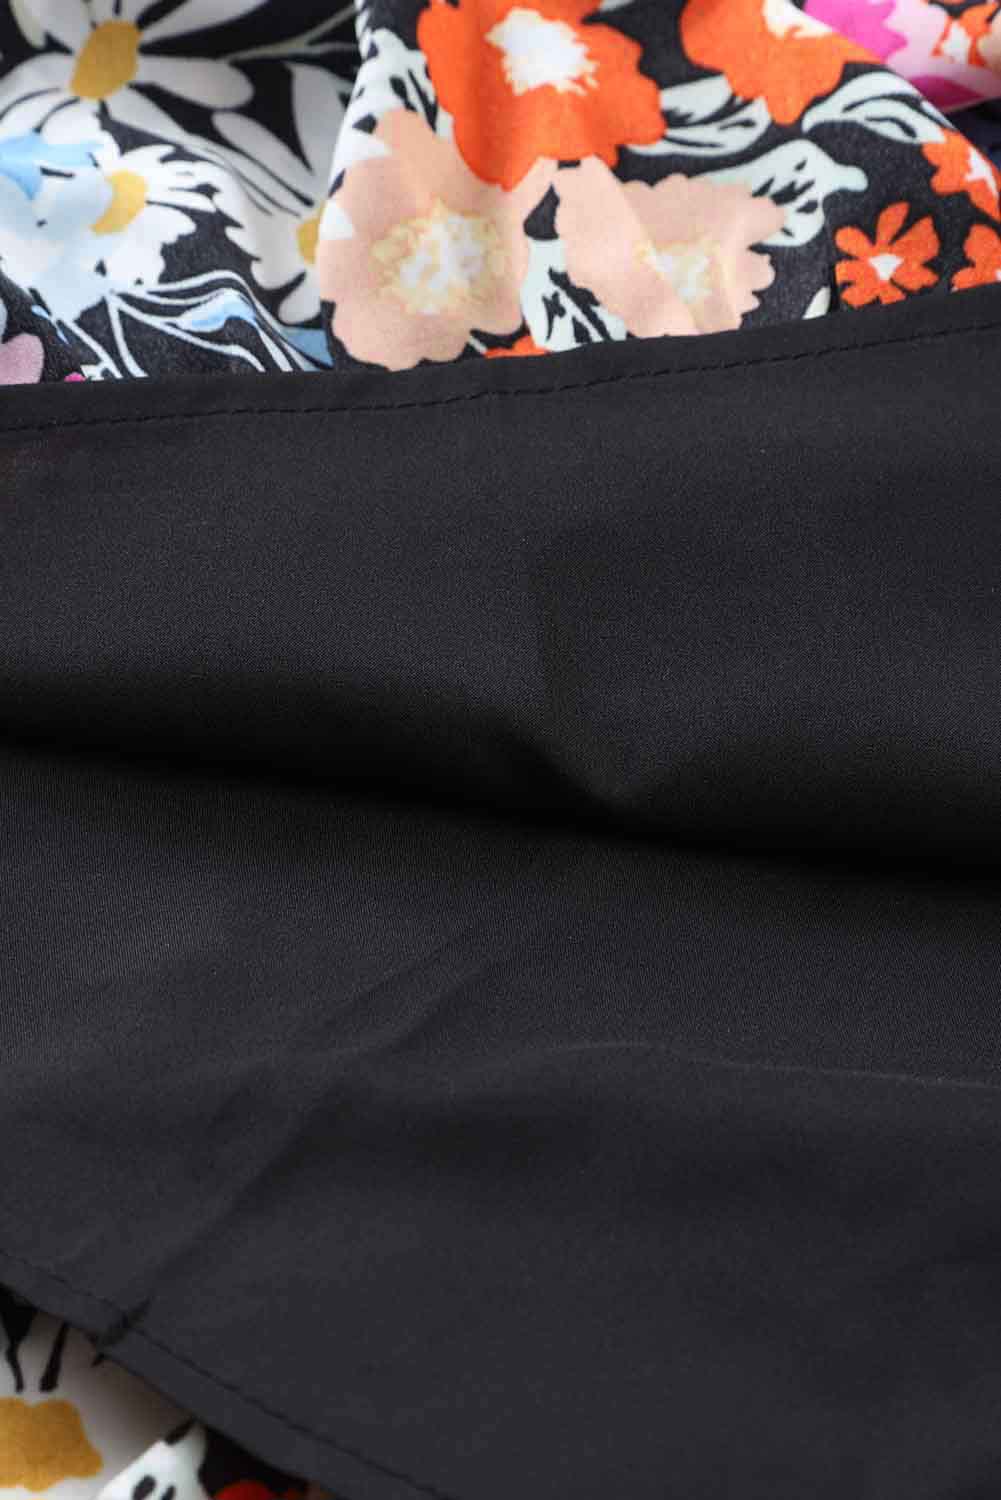 Black Short Sleeve Boho Floral Pattern Tiered Maxi Dress